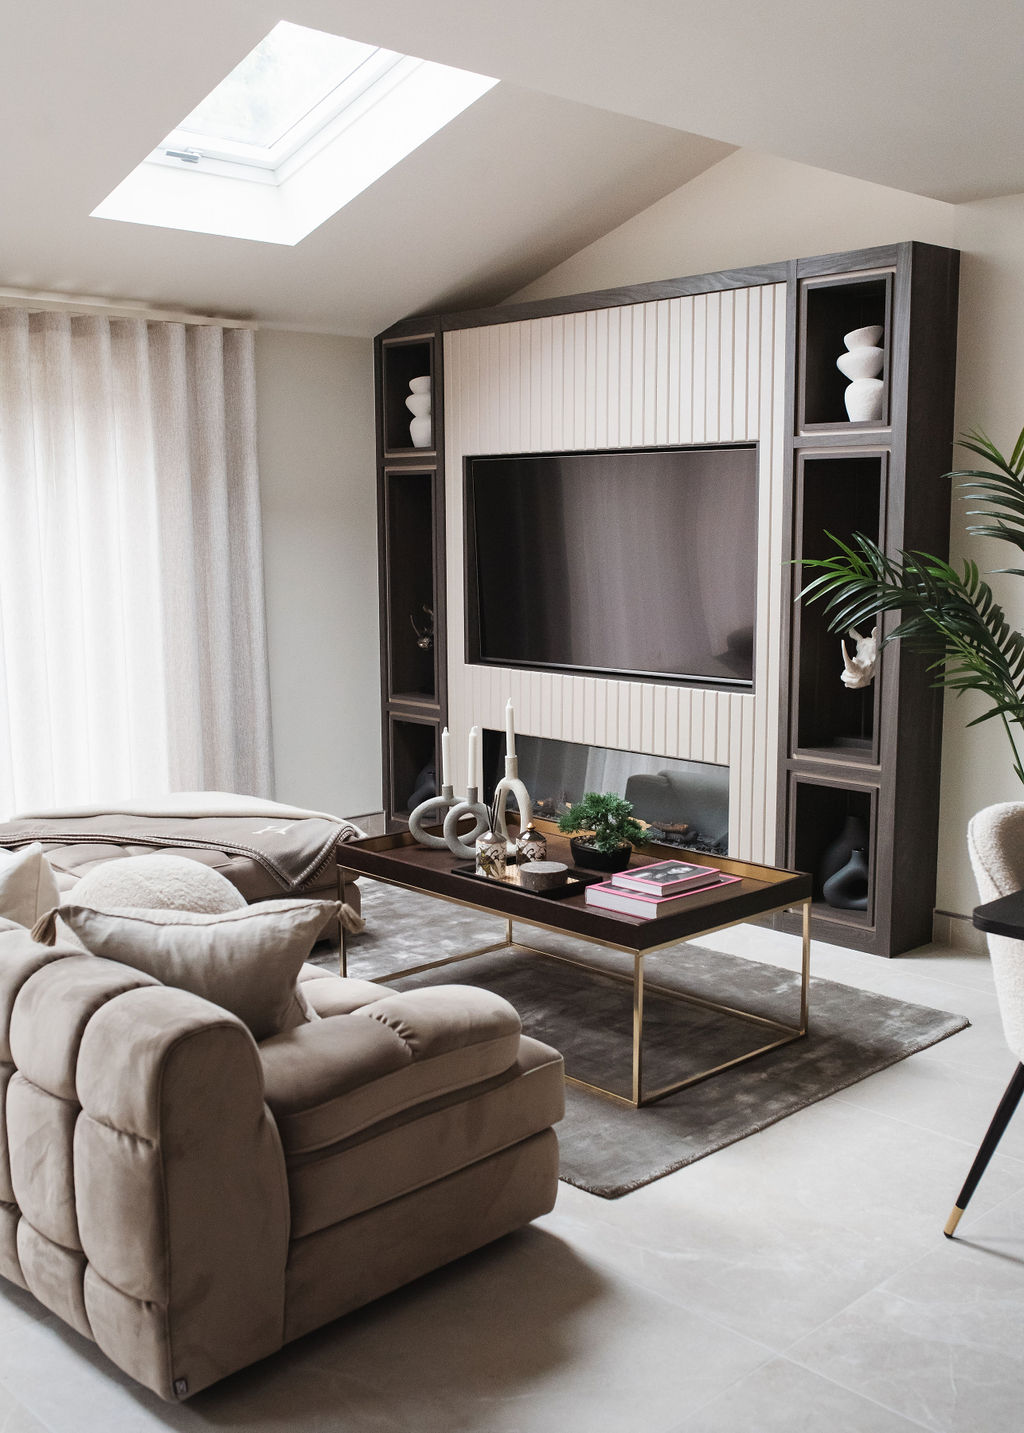 interior design case study image of a tv area with sofa